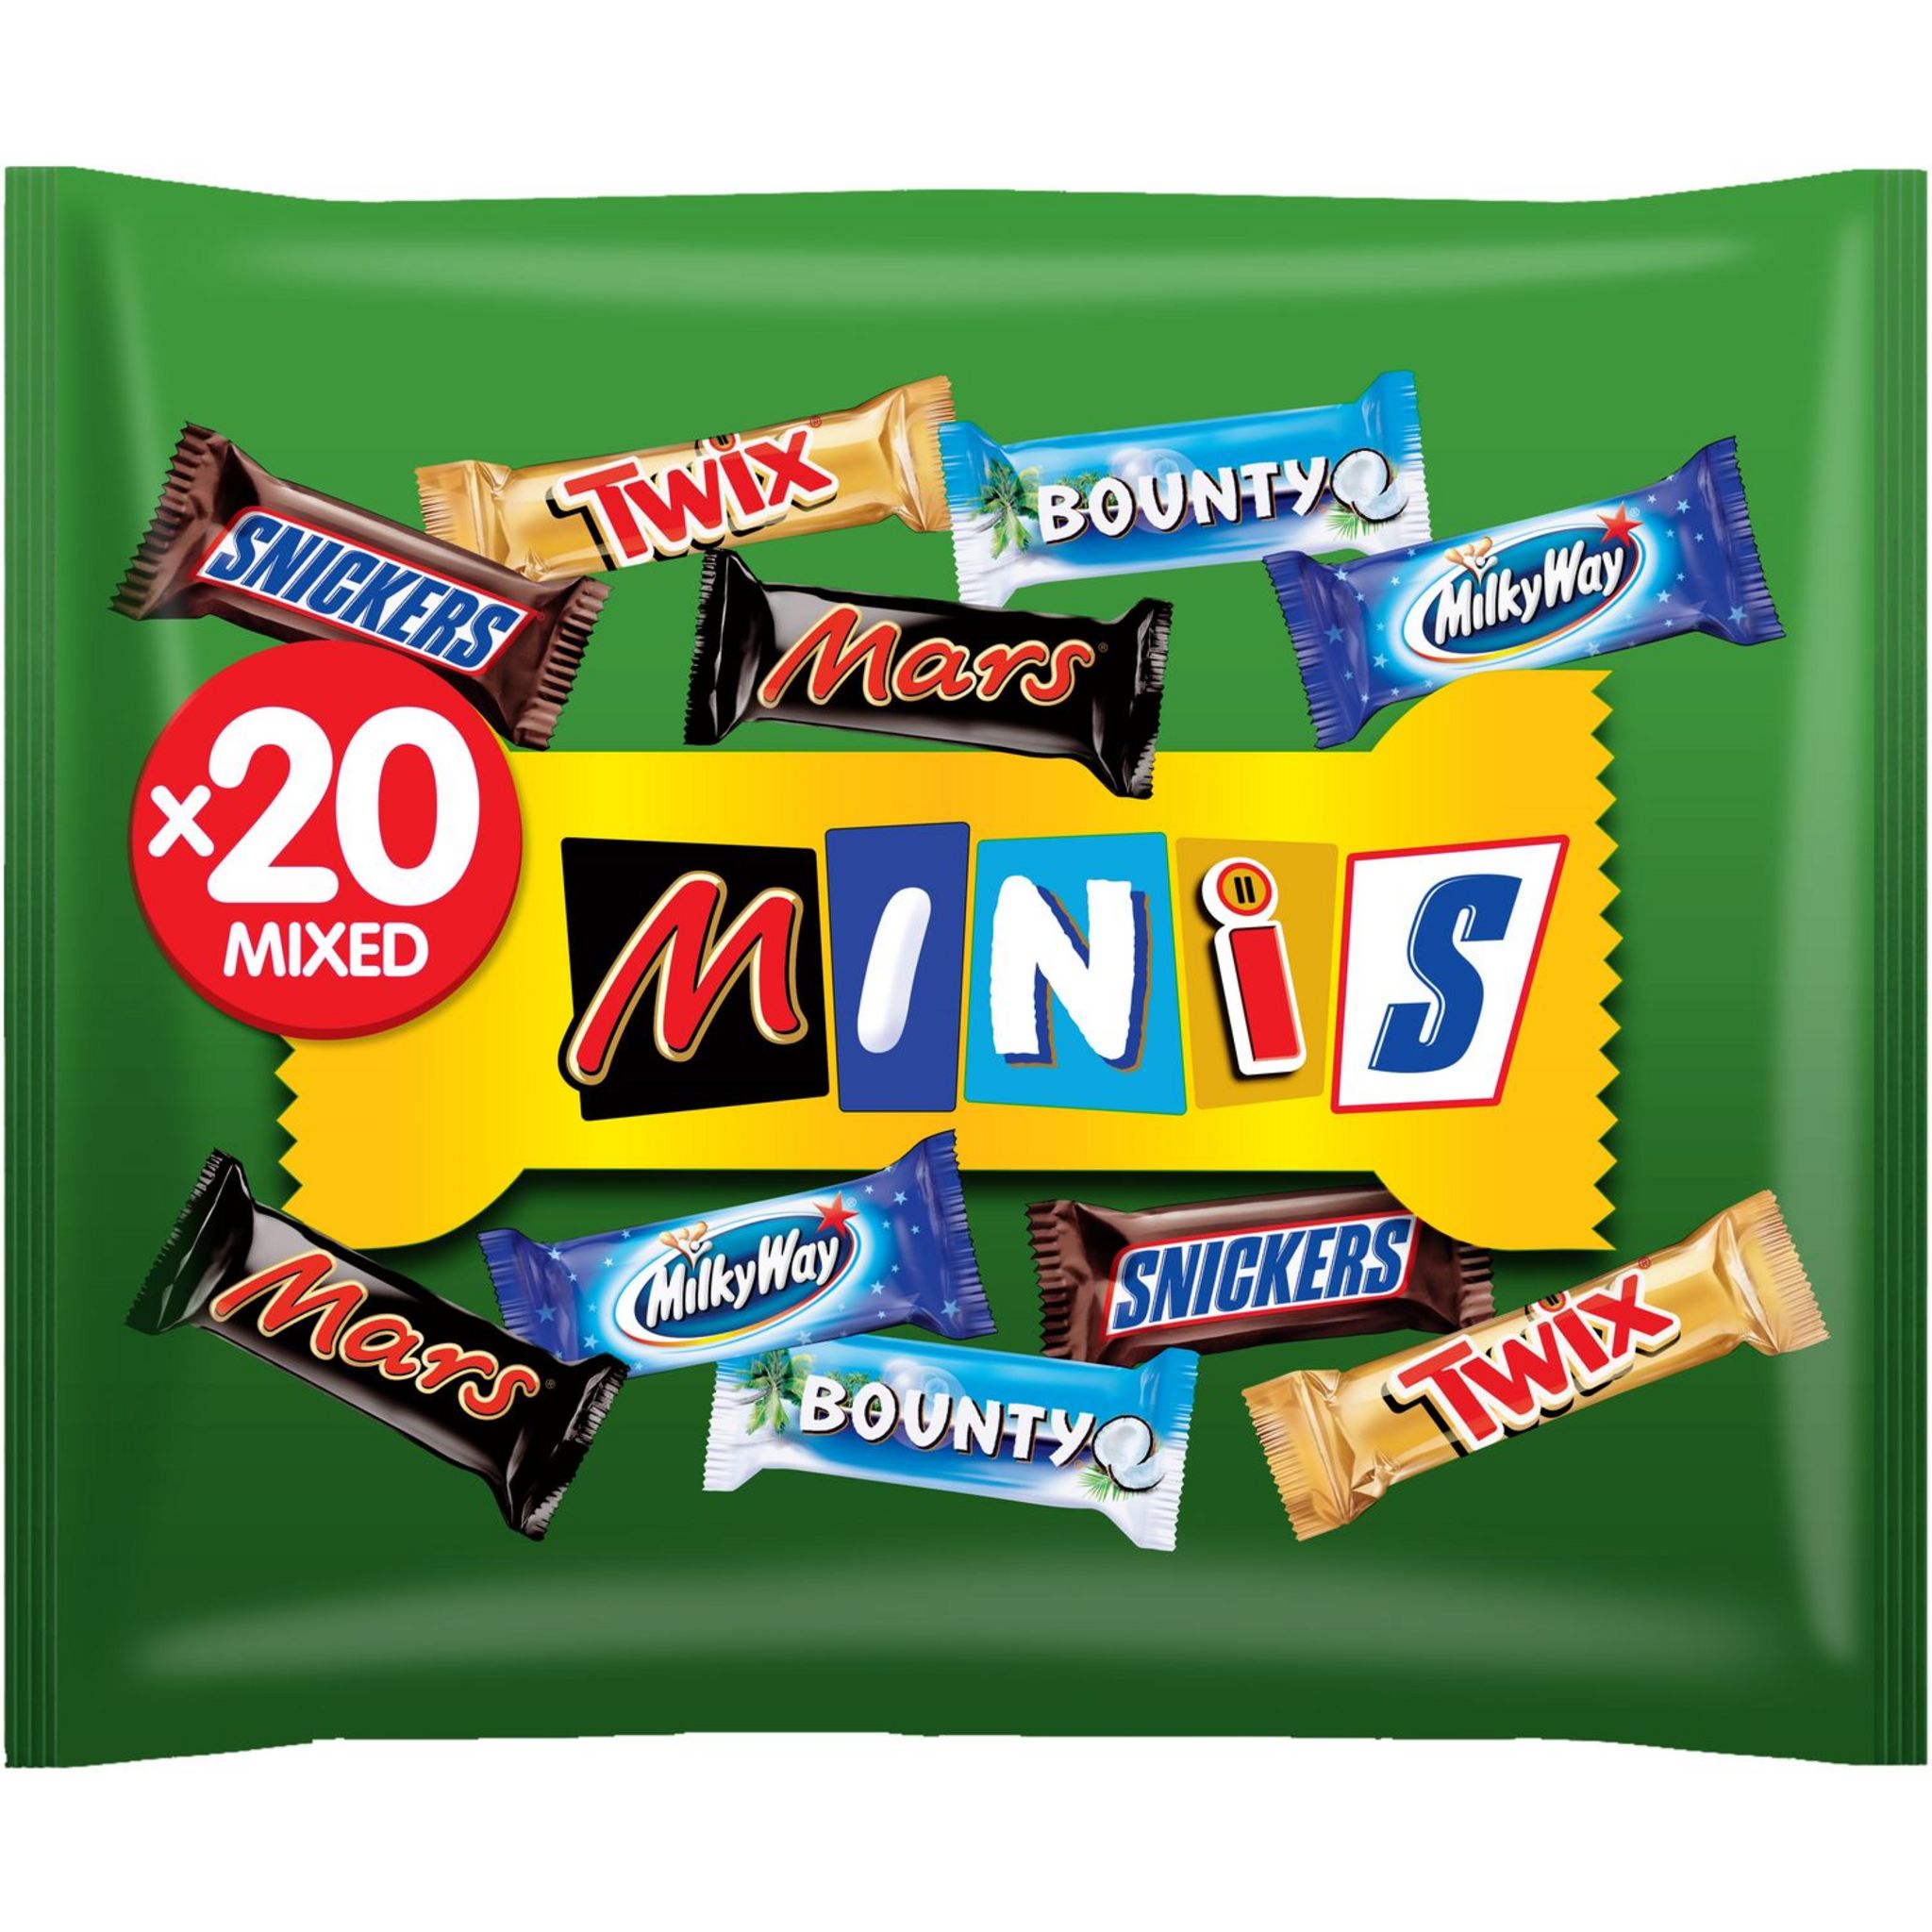 MARS Minis barres mix mars snickers twix bounty milky way 20 pièces 400g  pas cher 